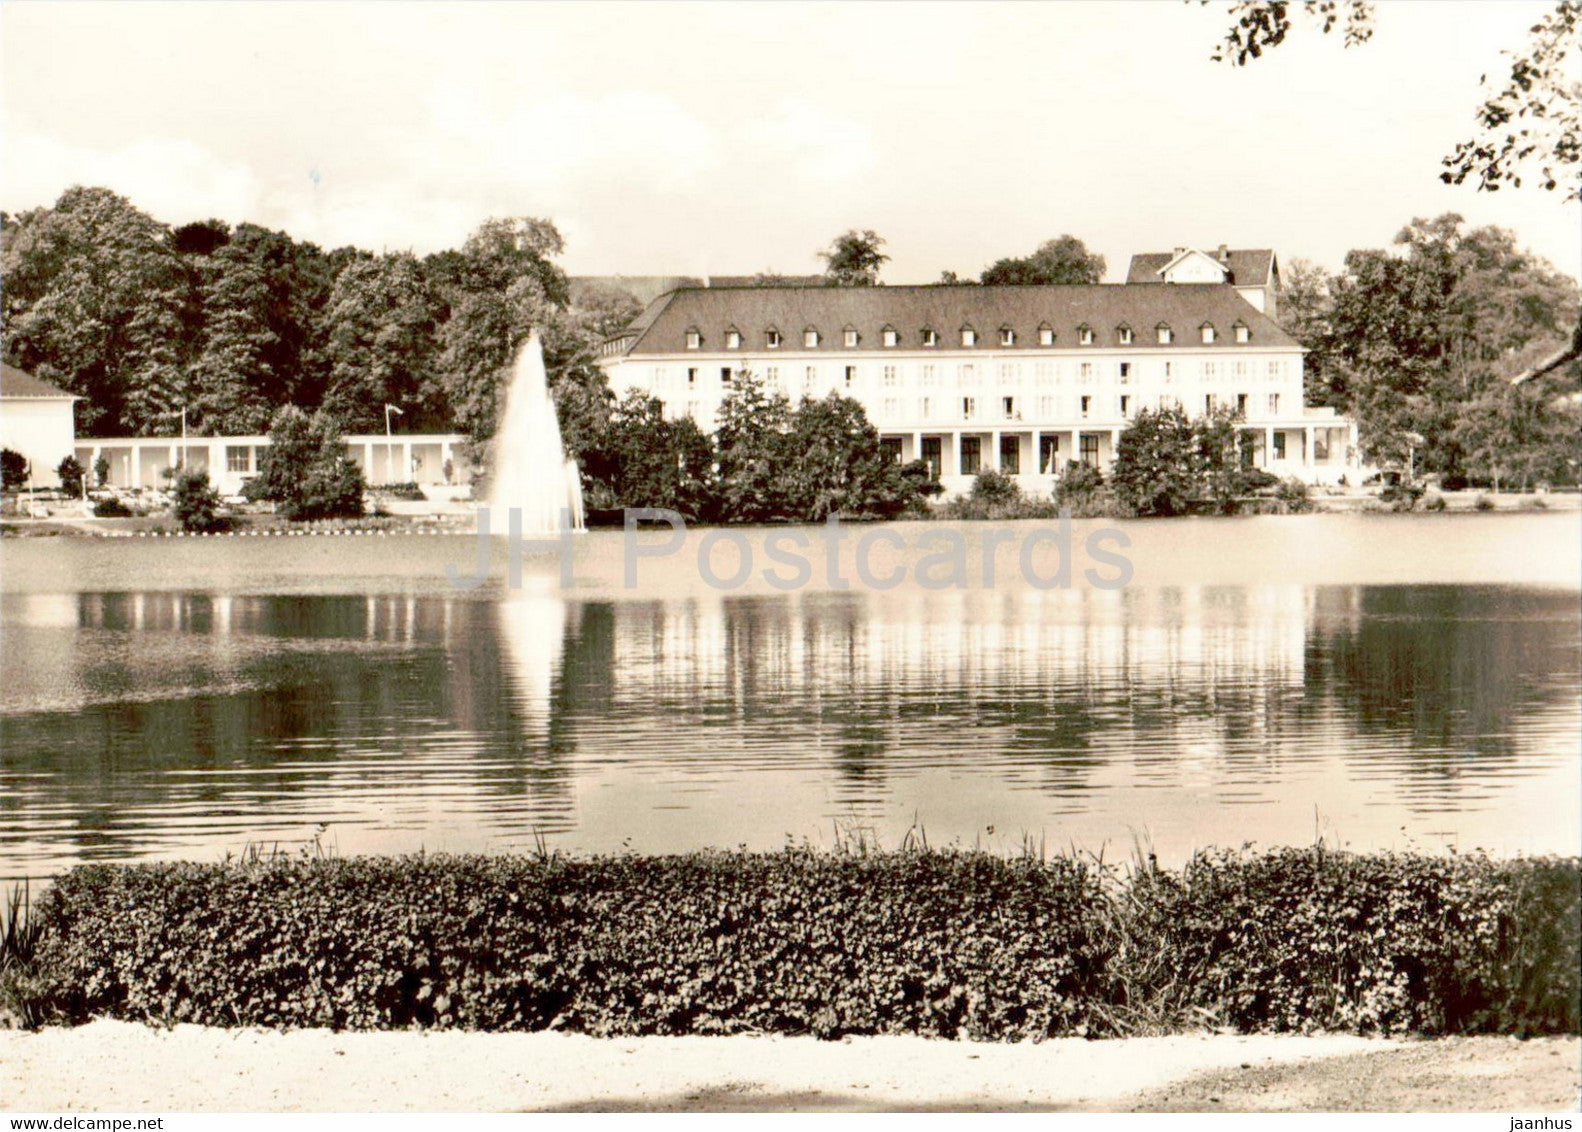 Bad Salzungen - Kurhaus am Burgsee - old postcard - Germany DDR - unused - JH Postcards